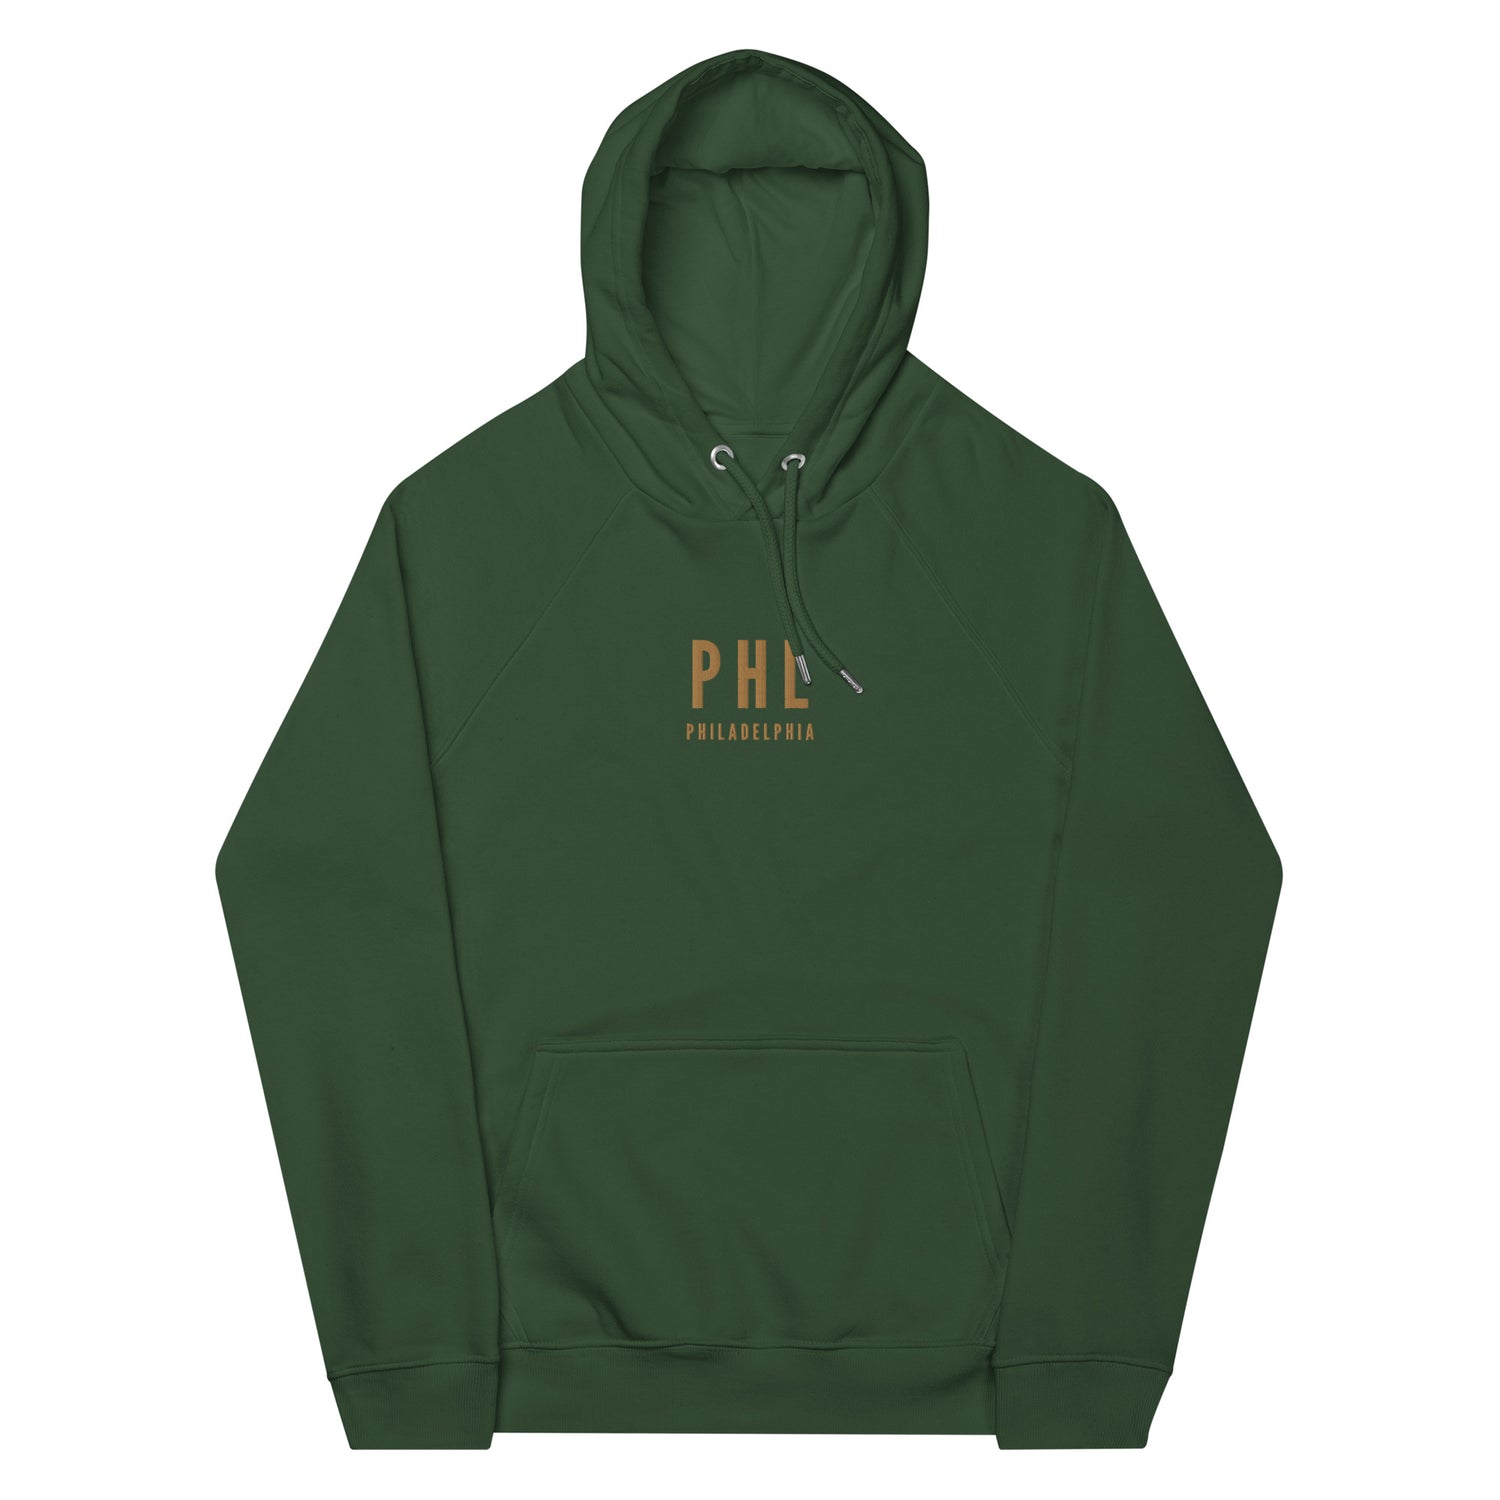 Philadelphia Pennsylvania Hoodies and Sweatshirts • PHL Airport Code